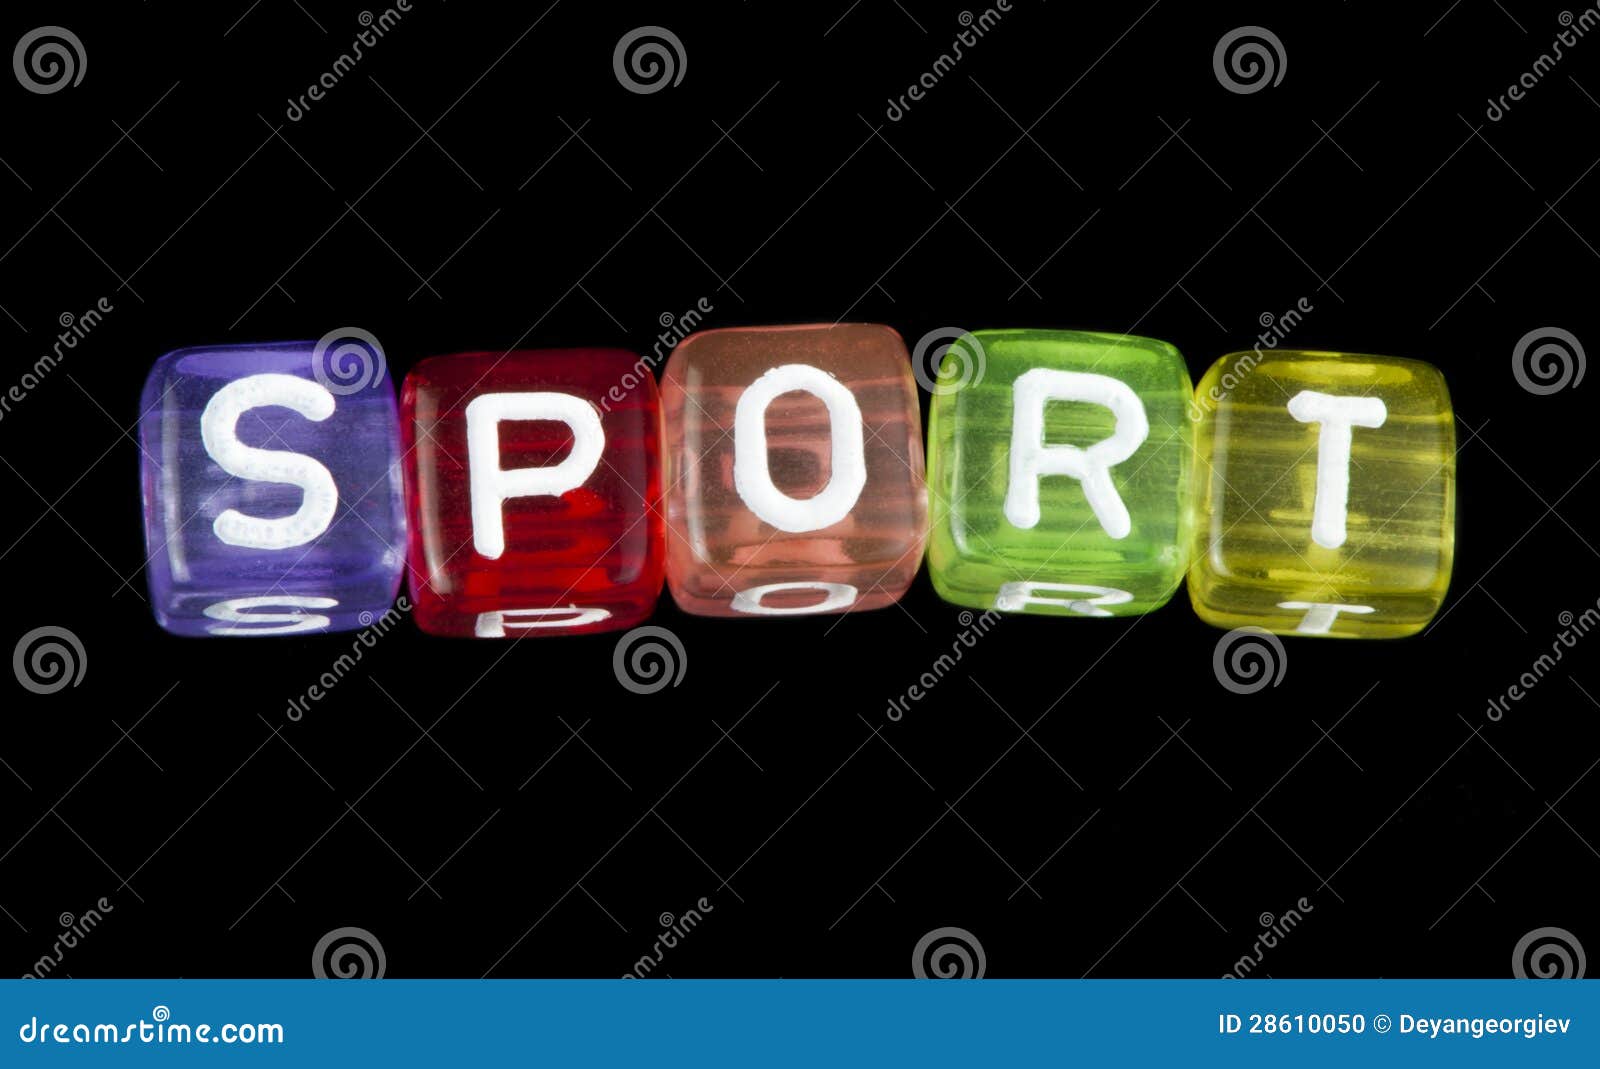 Спорт слово. Слово спорт цветными буквами. Предложение на слово спорт